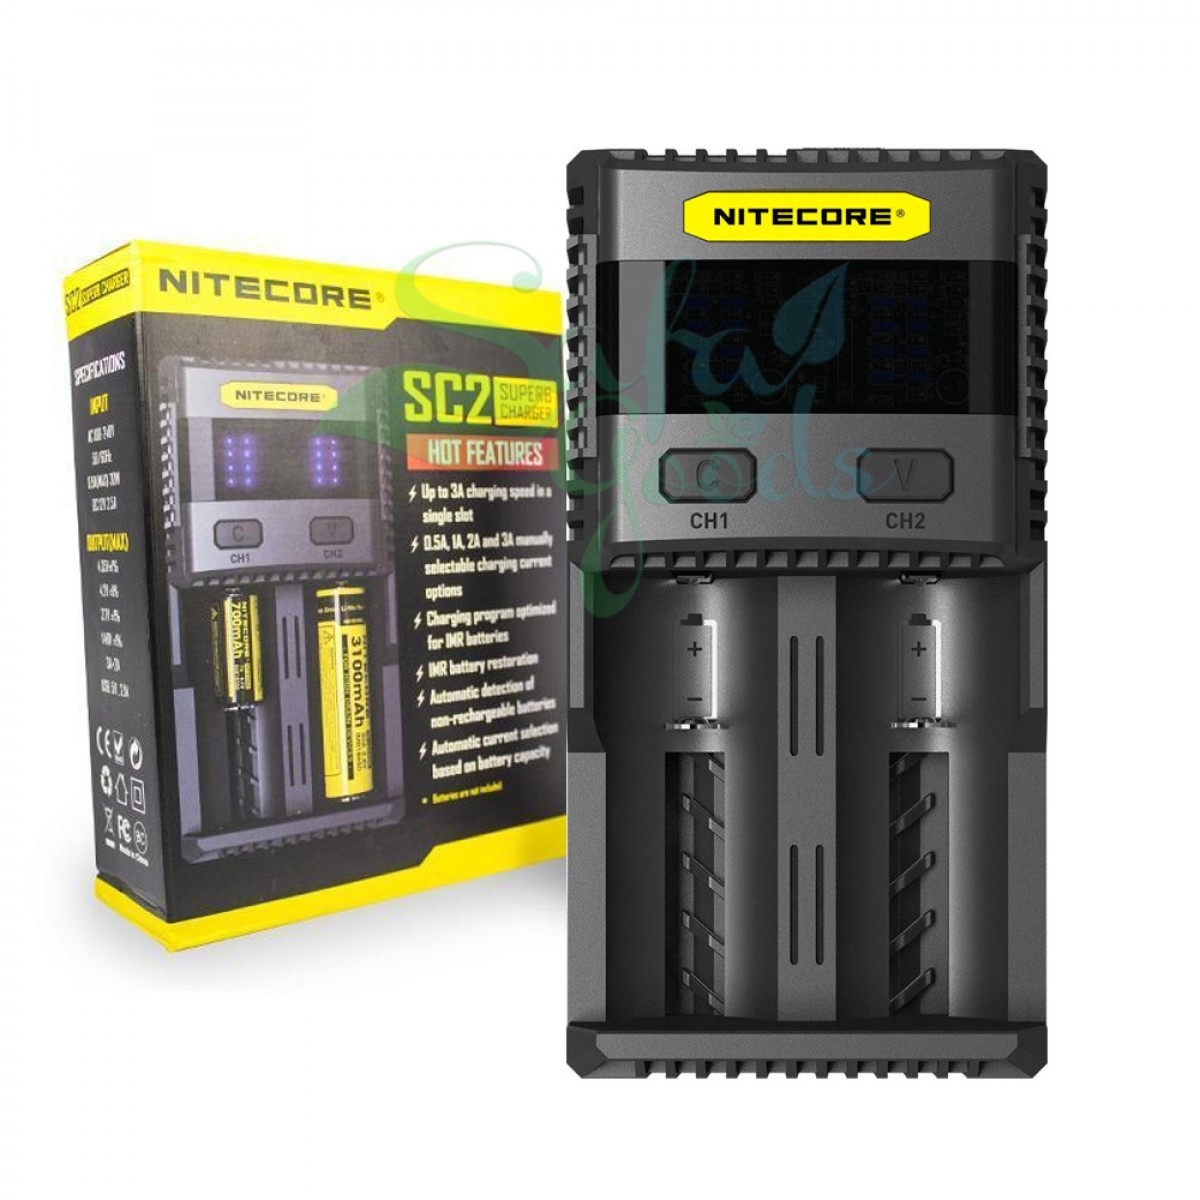 Nitecore - SC2 Battery Charger